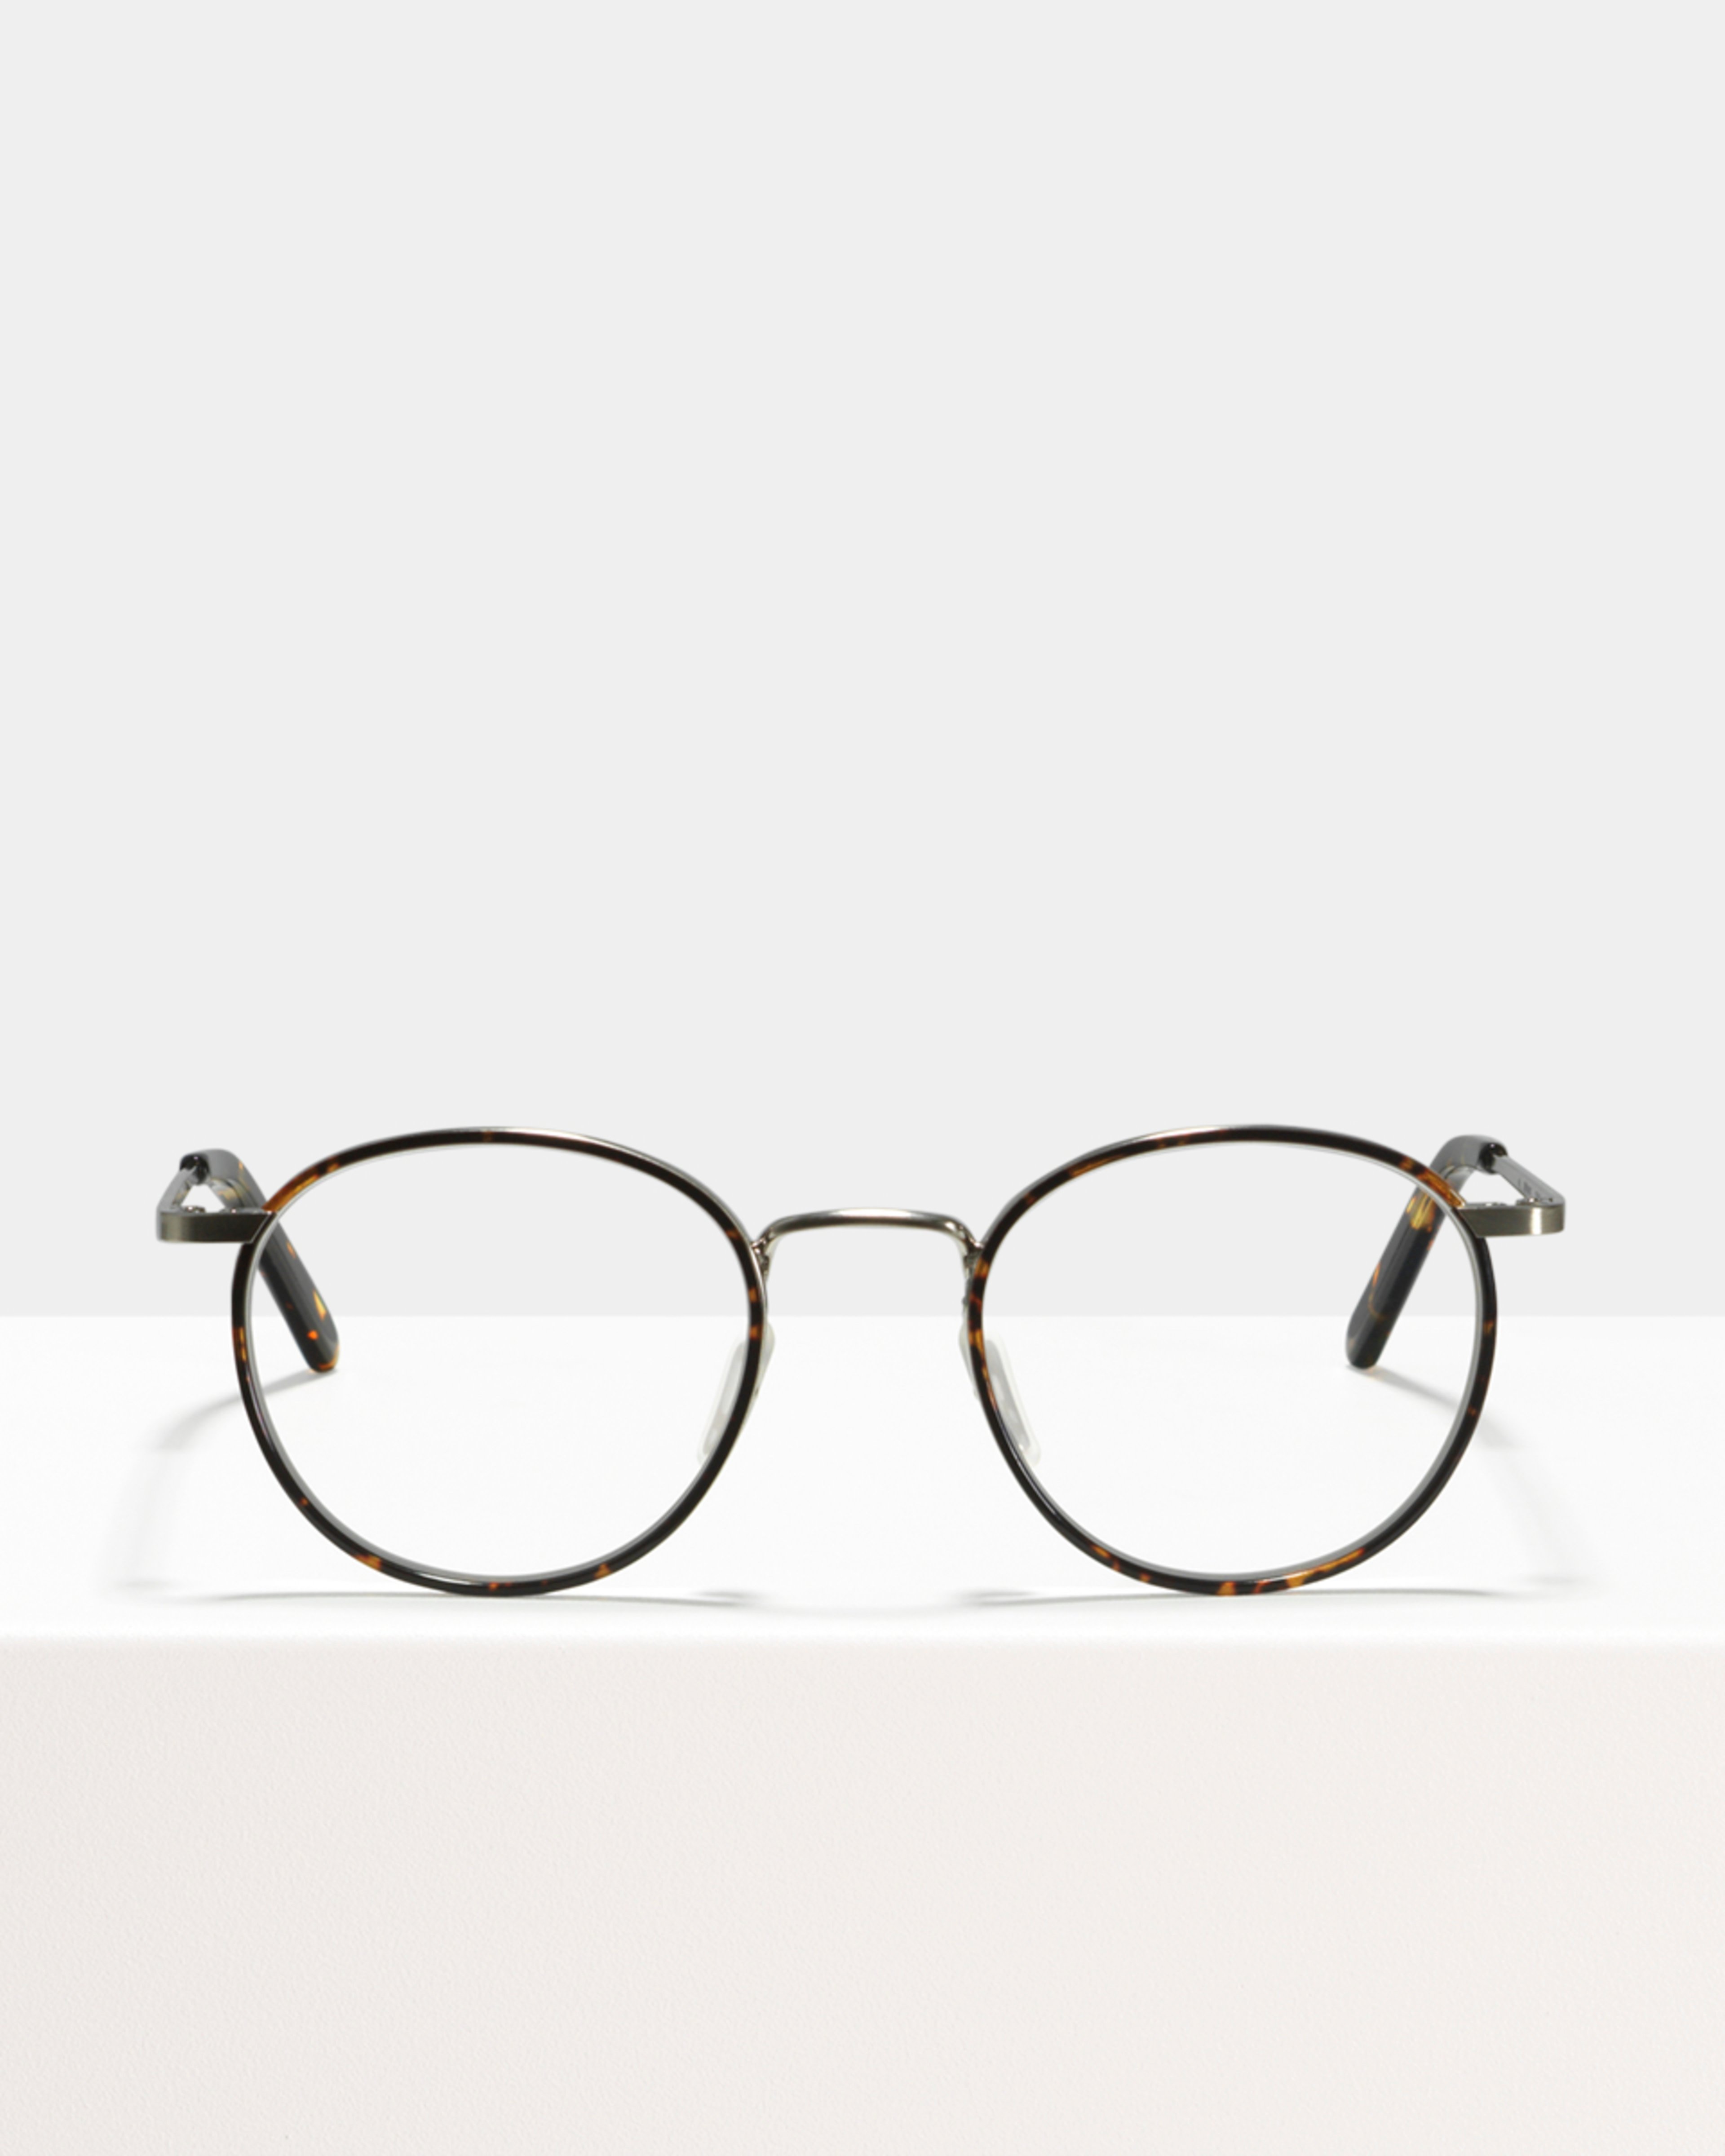 Ace & Tate Glasses | rund Metall in Braun, Orange, Silber